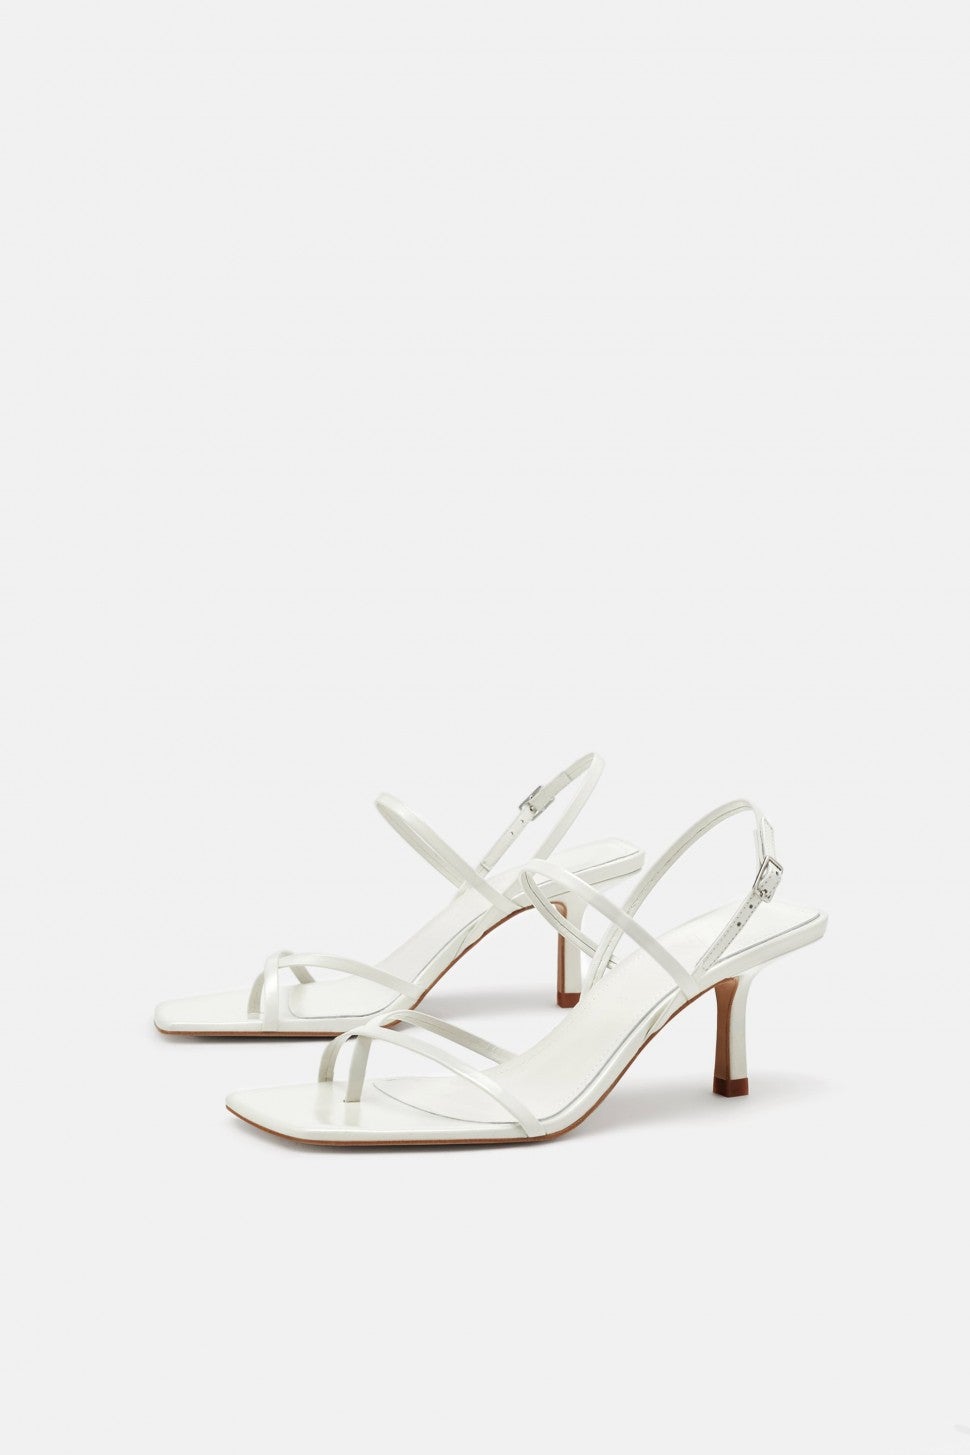 Zara white strappy sandal